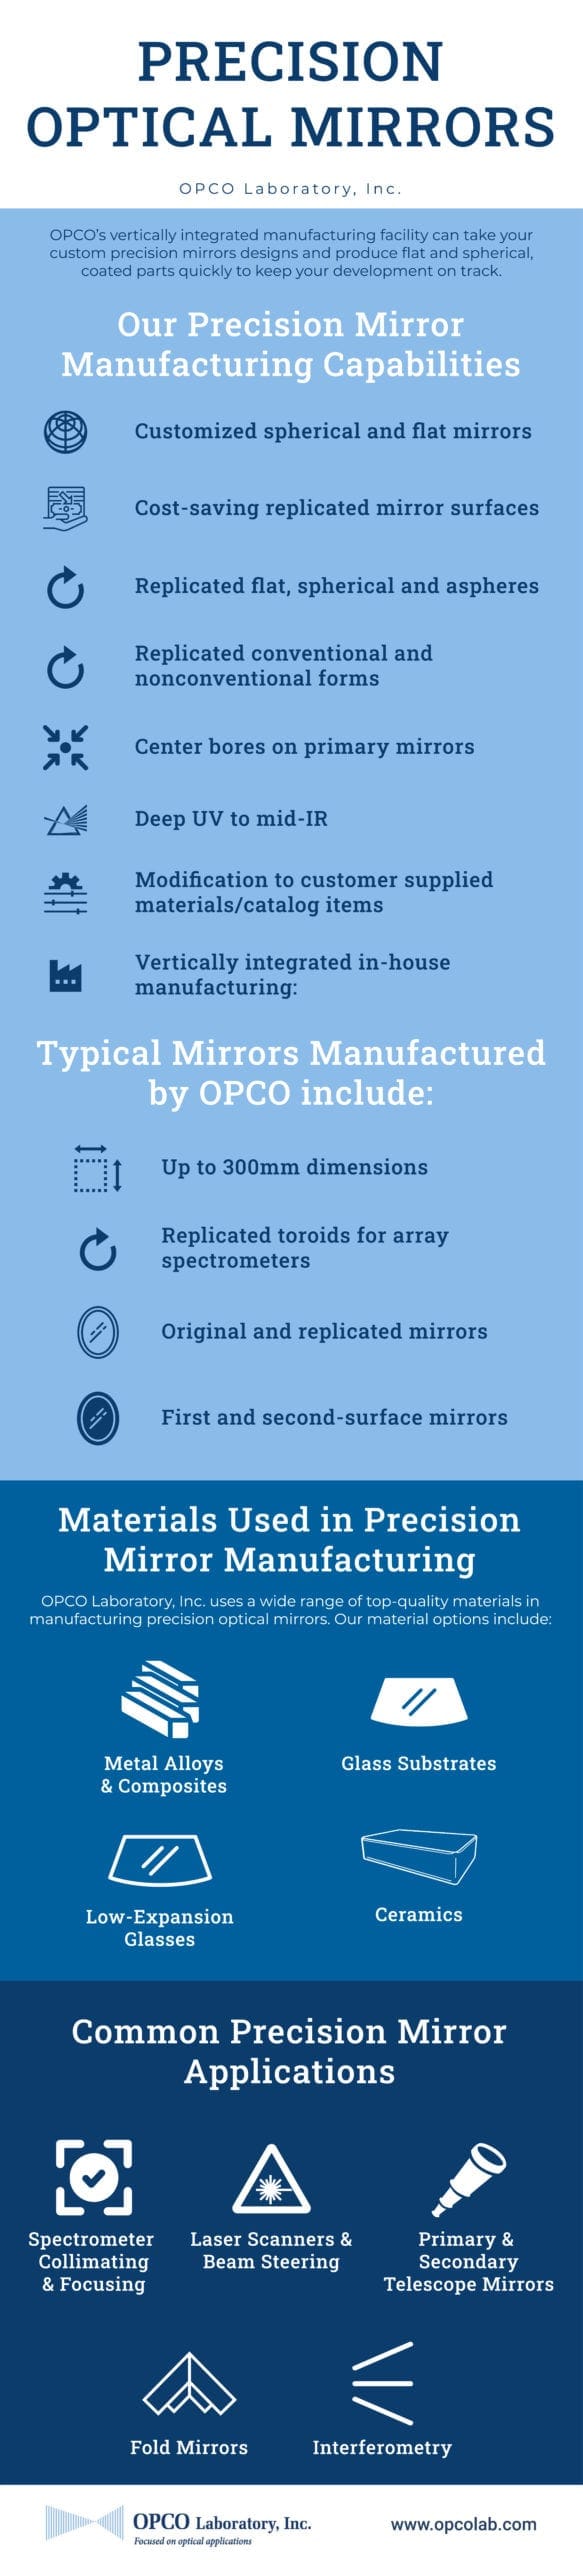 Precision Optical Mirrors